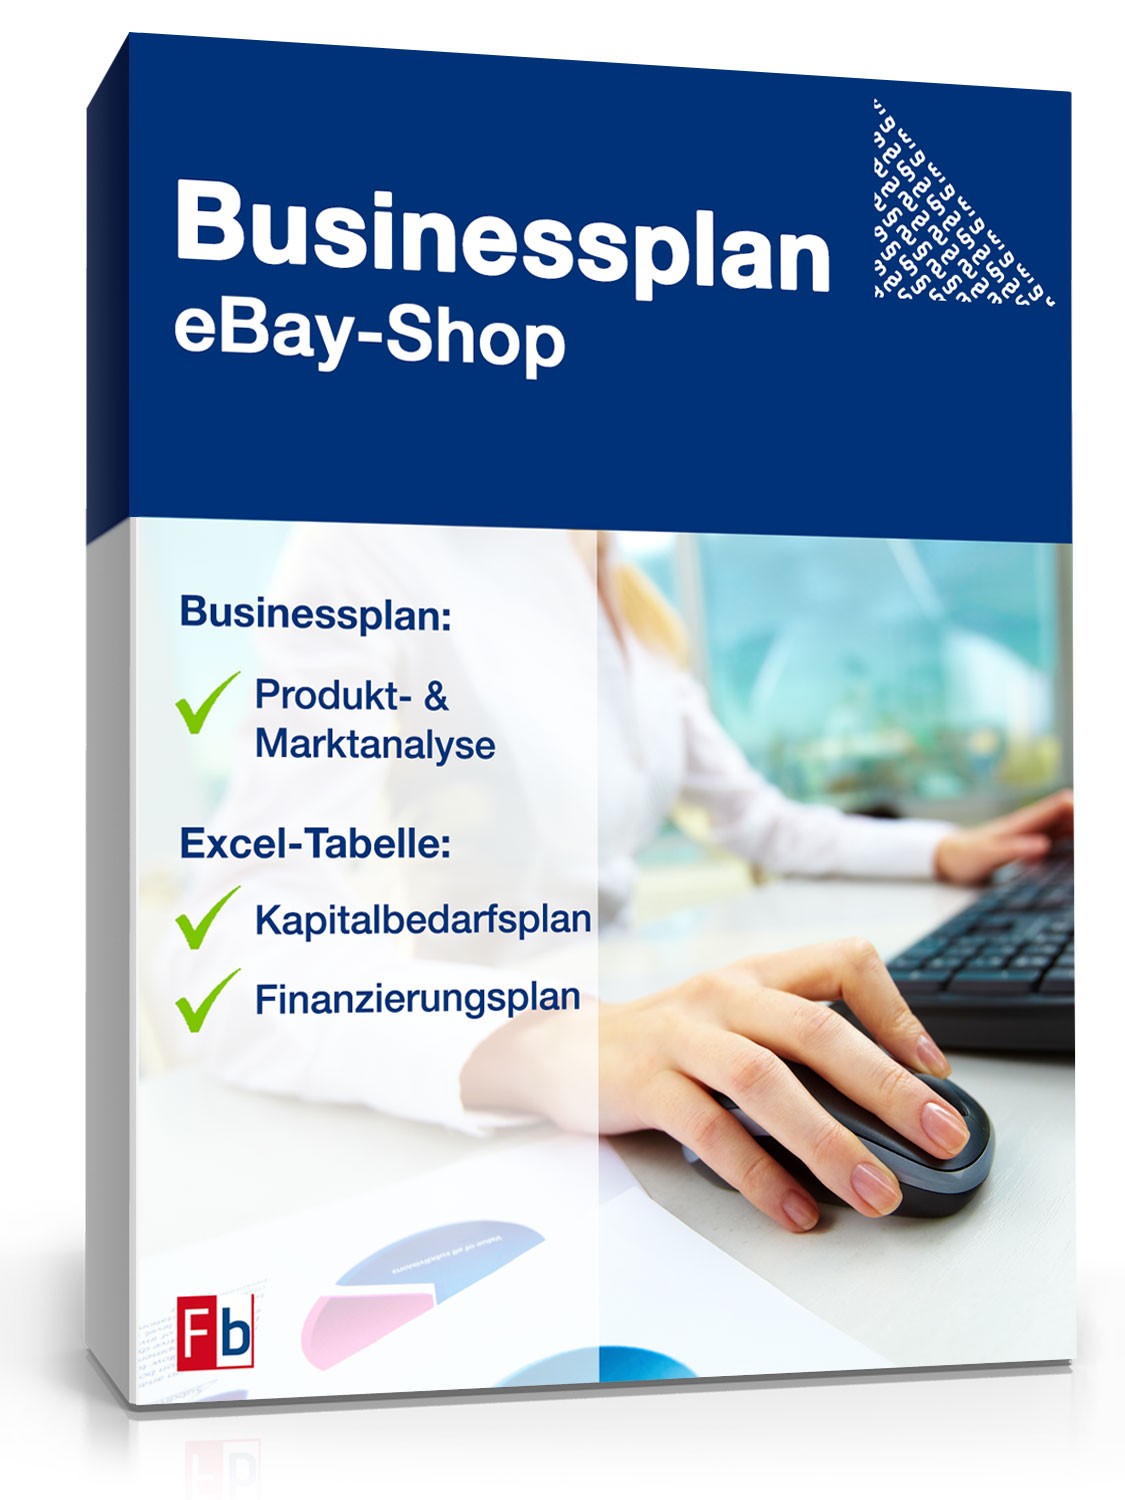 ebay selling business plan